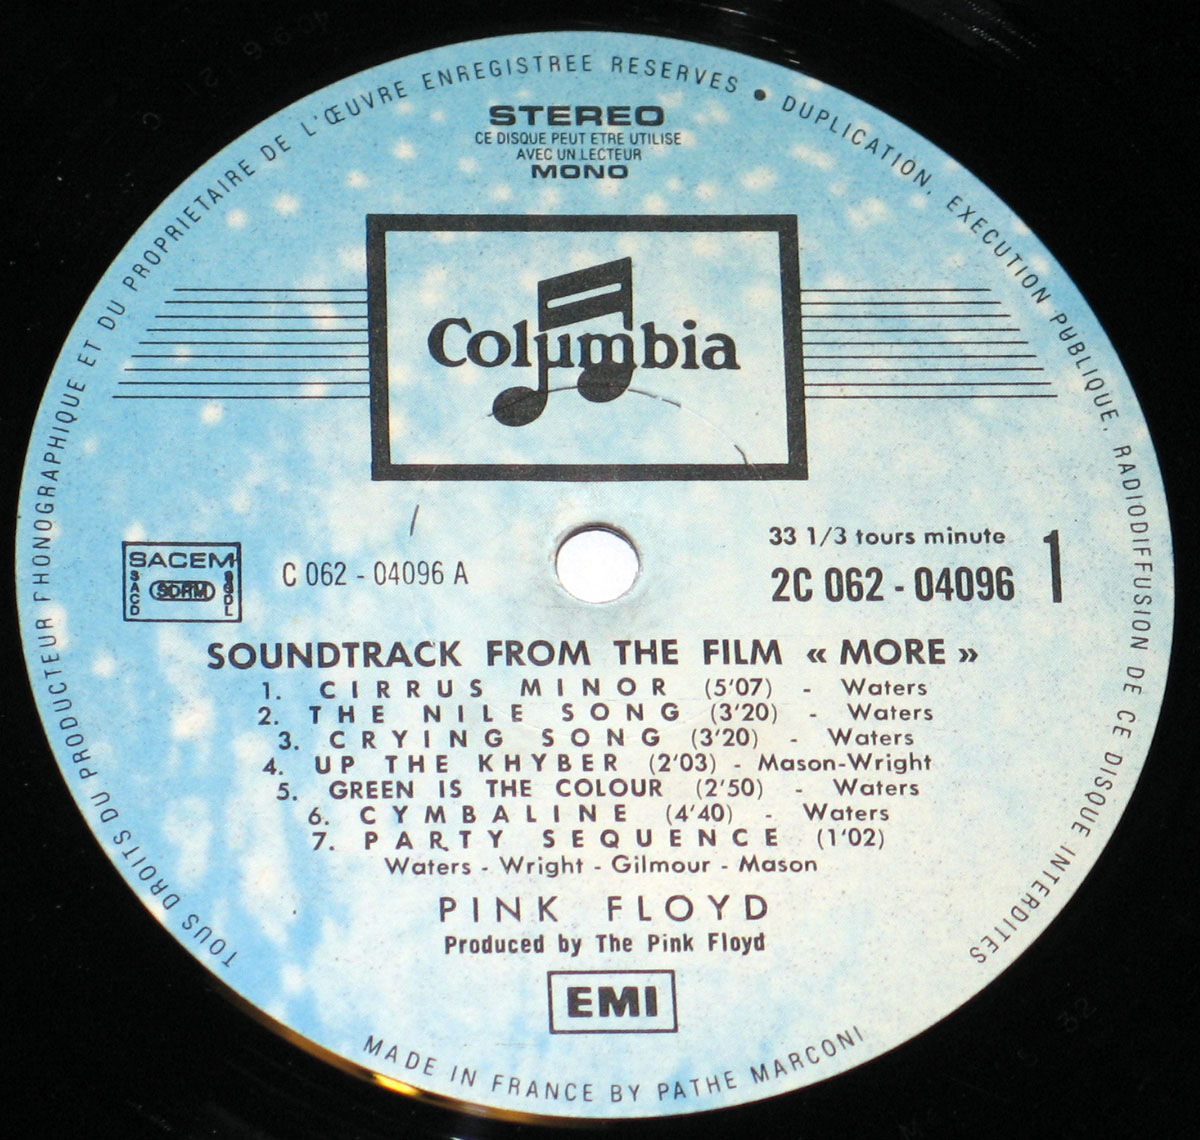 Pink Floyd vinyl, 20723 LP records & CD found on CDandLP